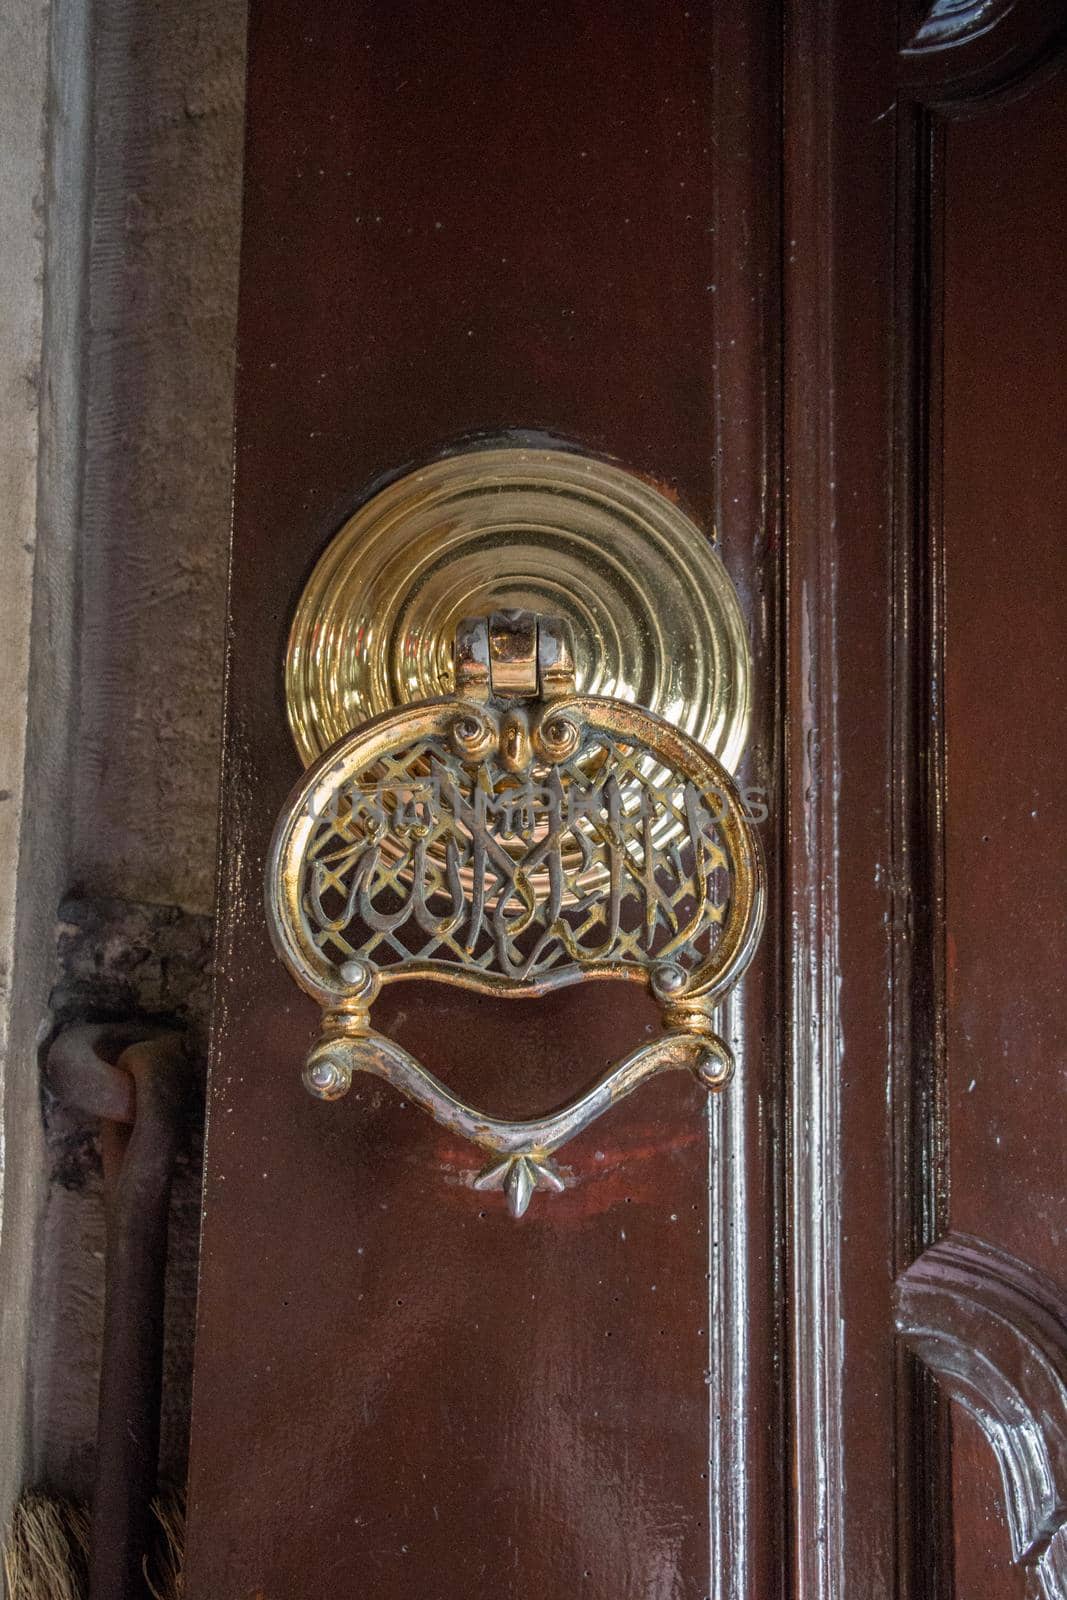  Old Handmade ottoman door knob by berkay